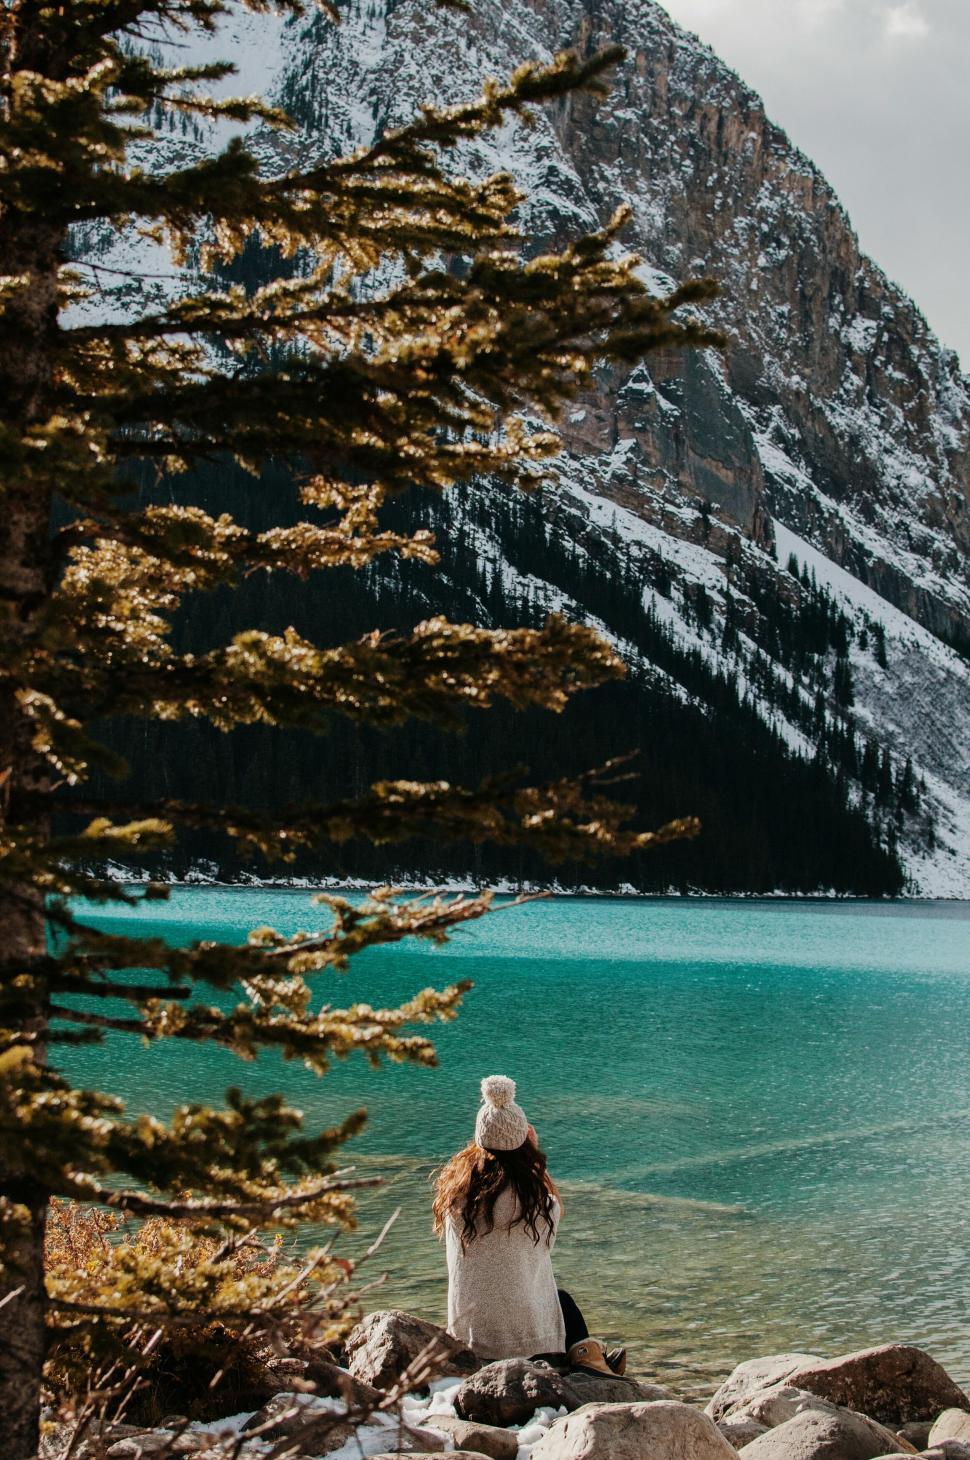 Free Image of Woman Admiring Majestic Mountain Lakeside 